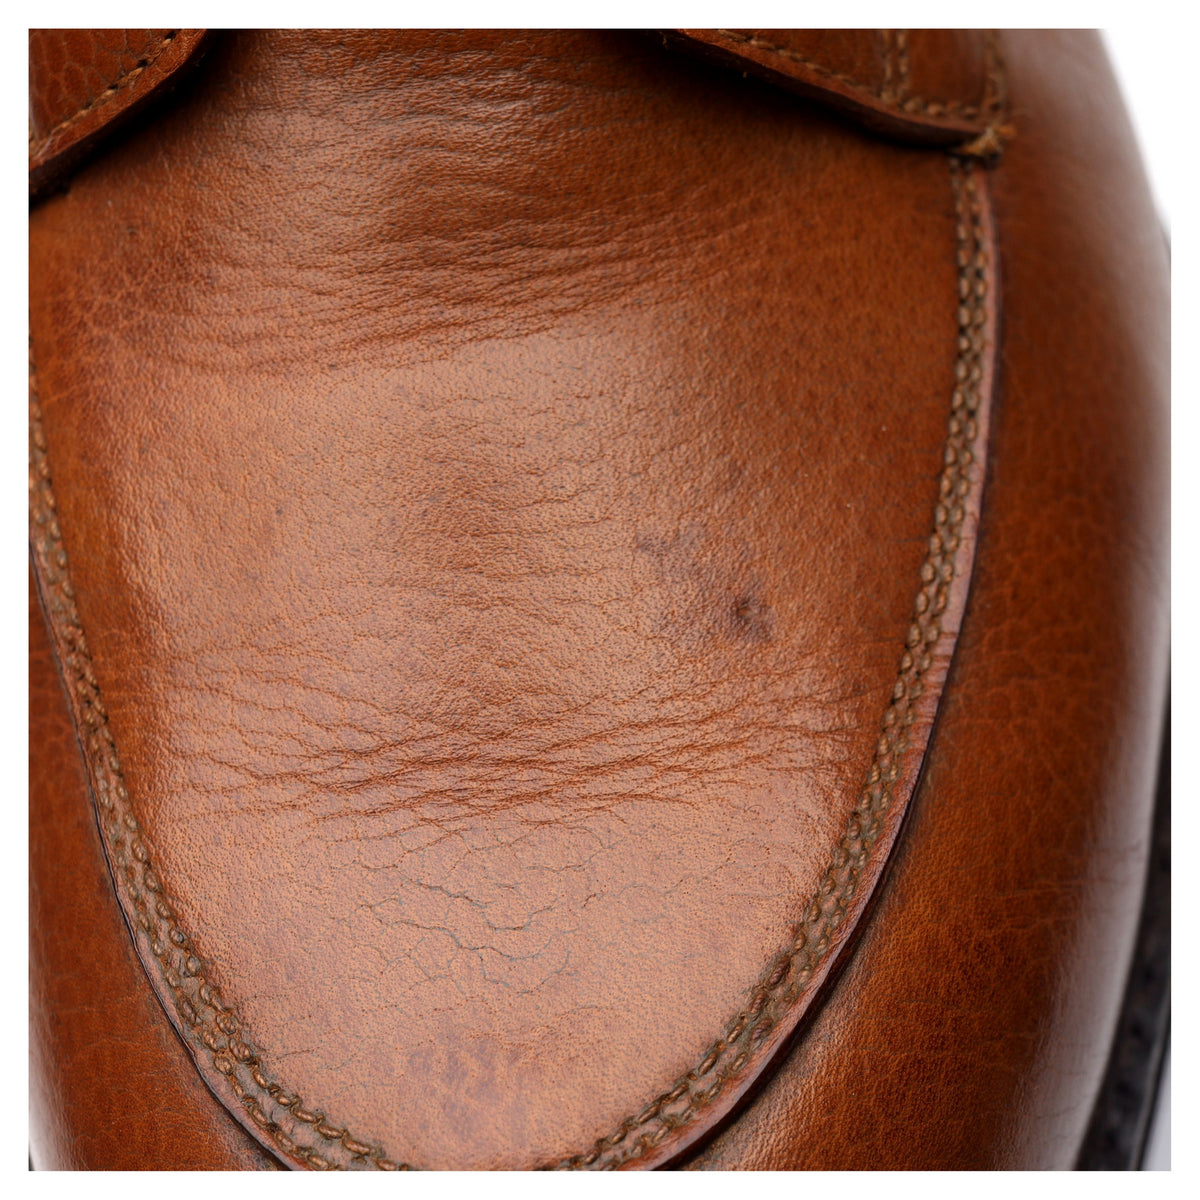 Purdey Tan Brown Leather Split Toe Boots UK 10 E